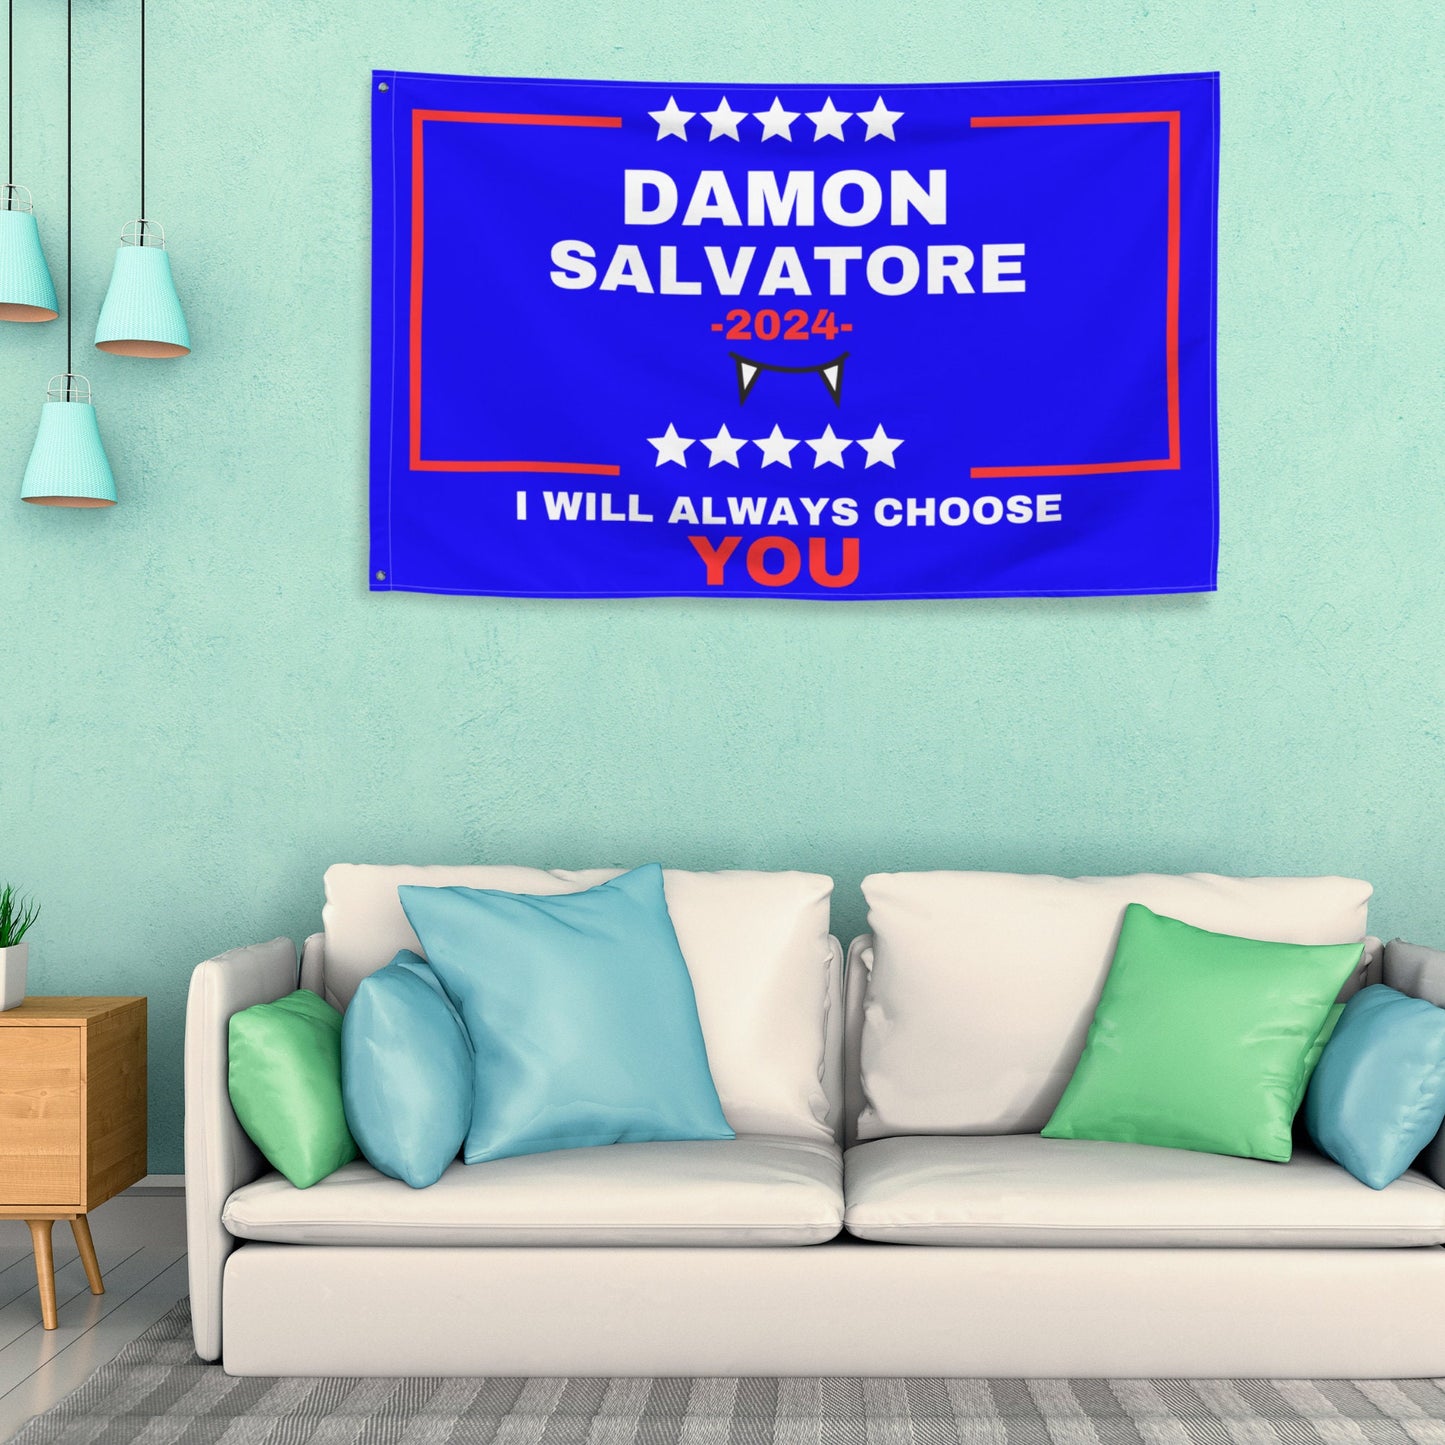 Damon Salvatore Flag, Damon Salvatore merch, TVD tapestry, TVD room decor, Tvd dorm flag, Tvd gift, Team Damon, Funny tvd gift